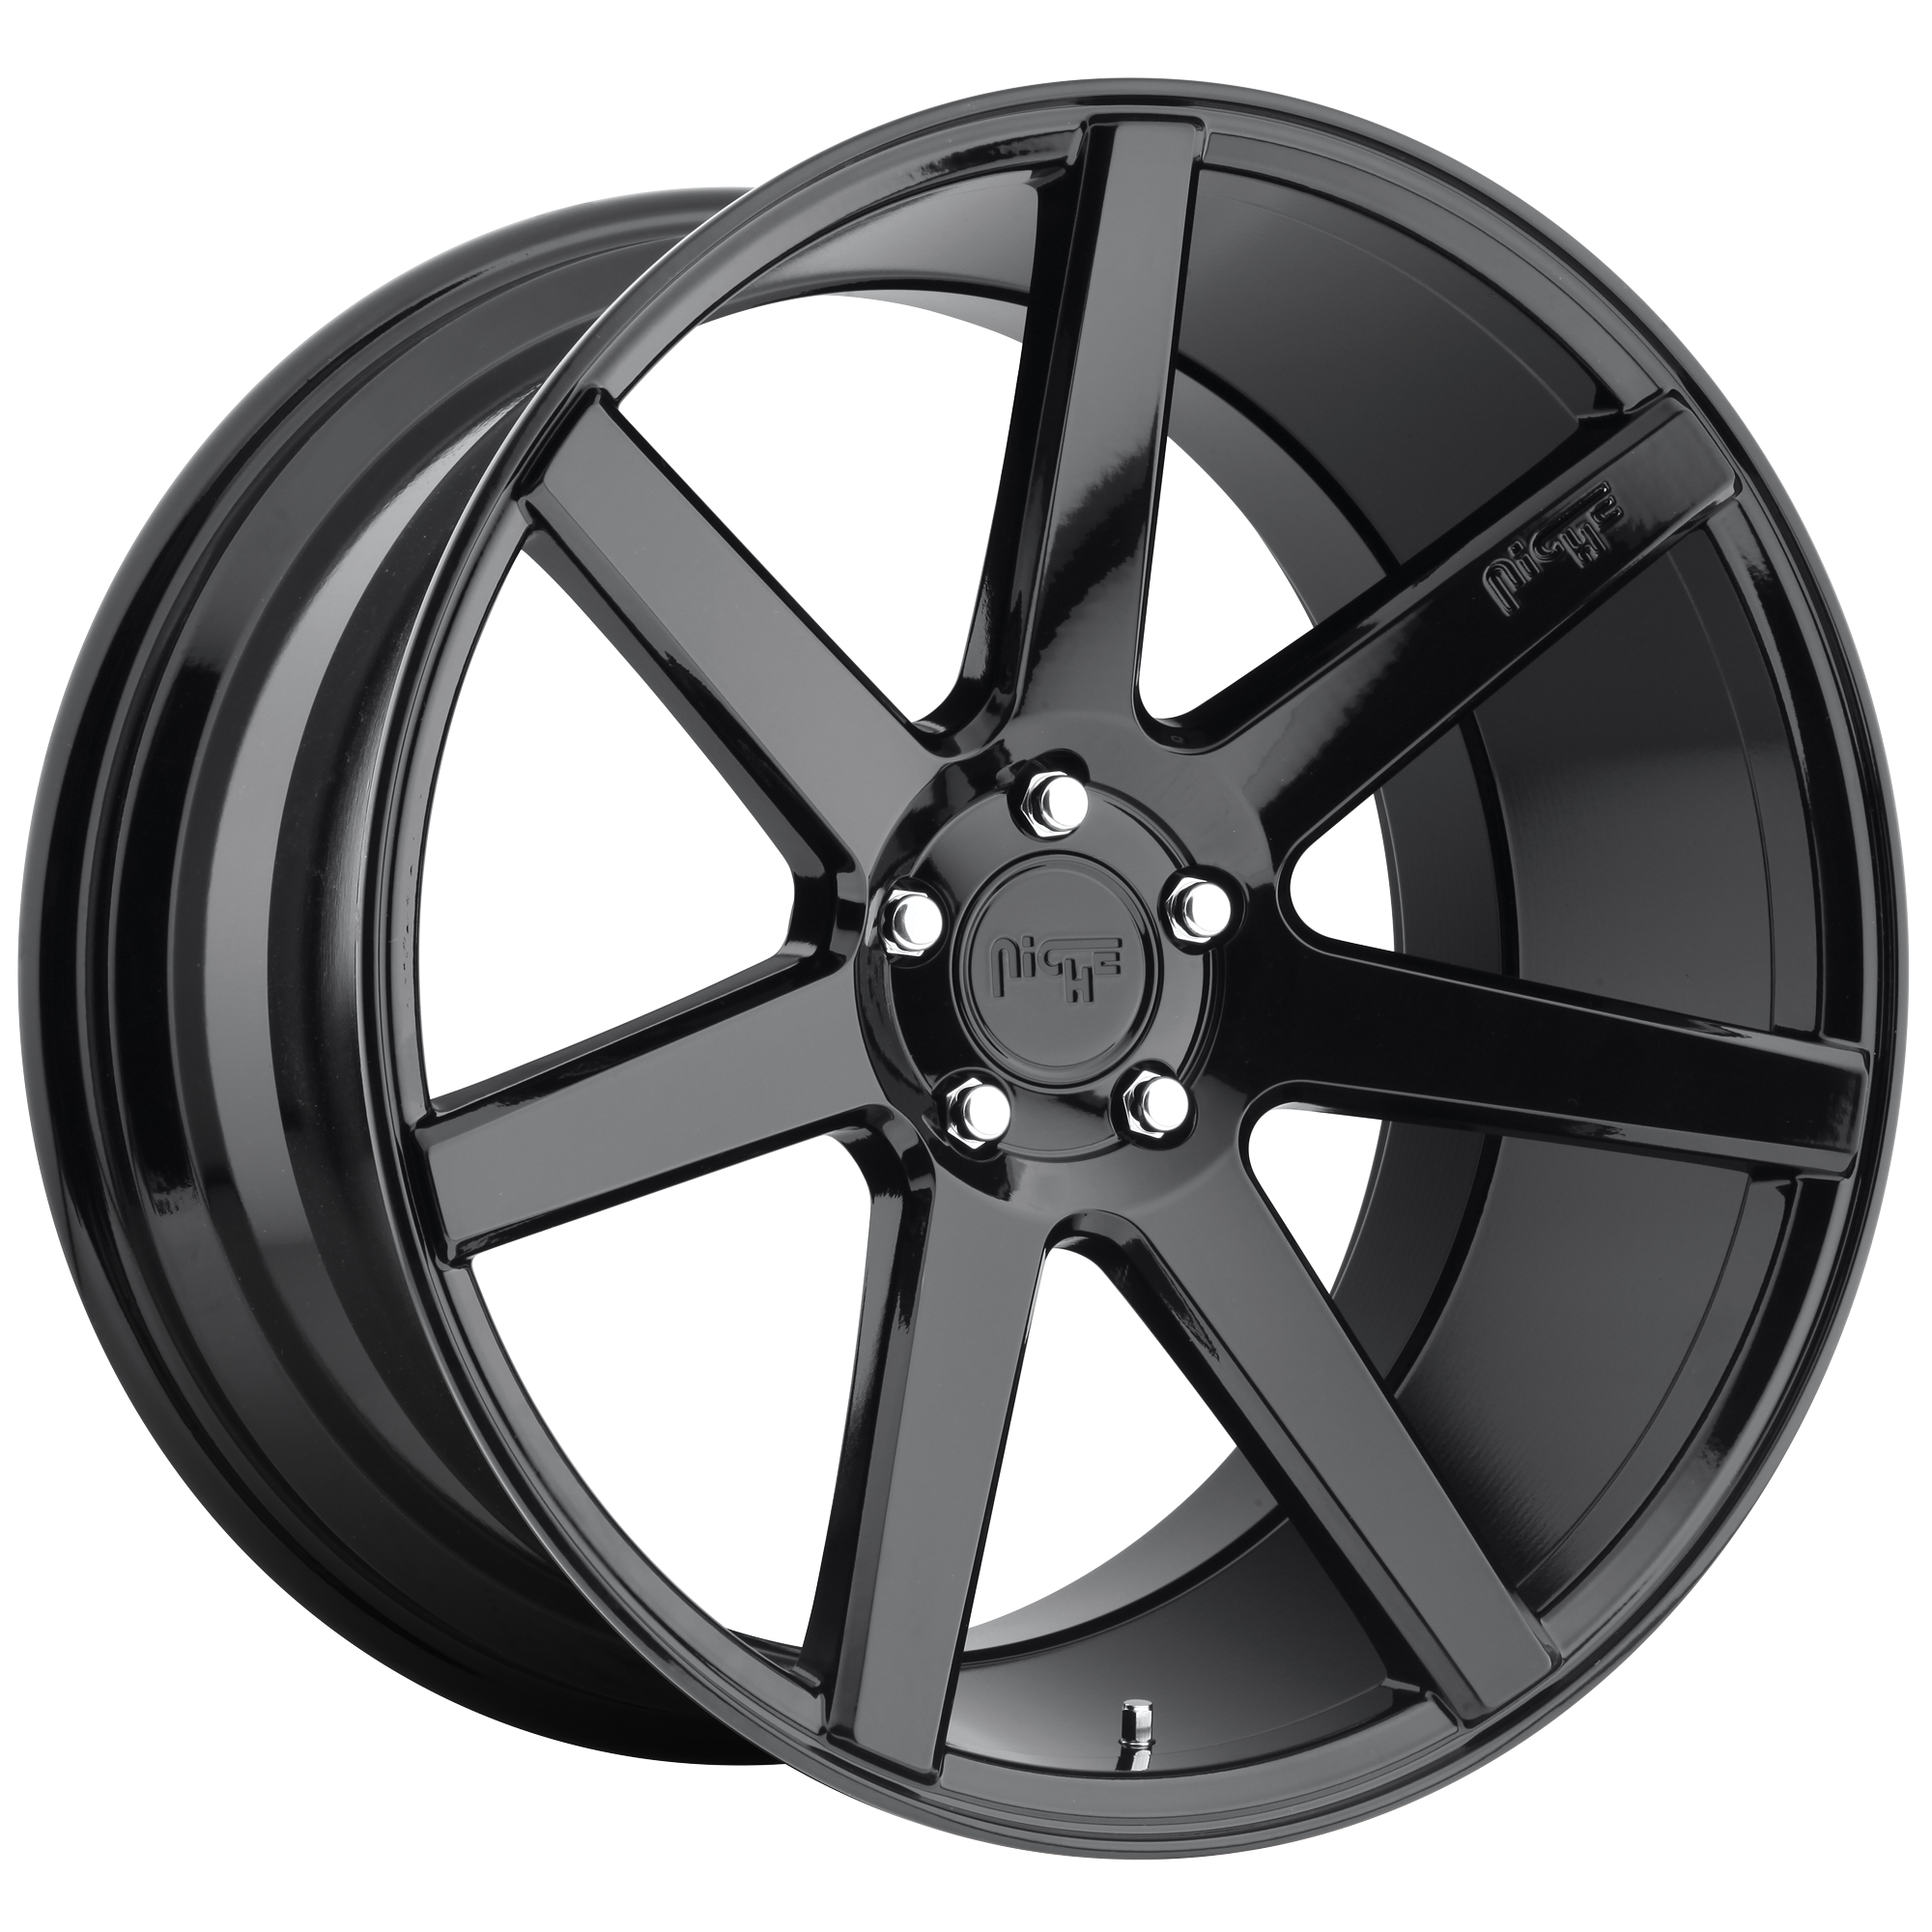 VERONA 20x9 5x120.00 GLOSS BLACK (35 mm) - Tires and Engine Performance